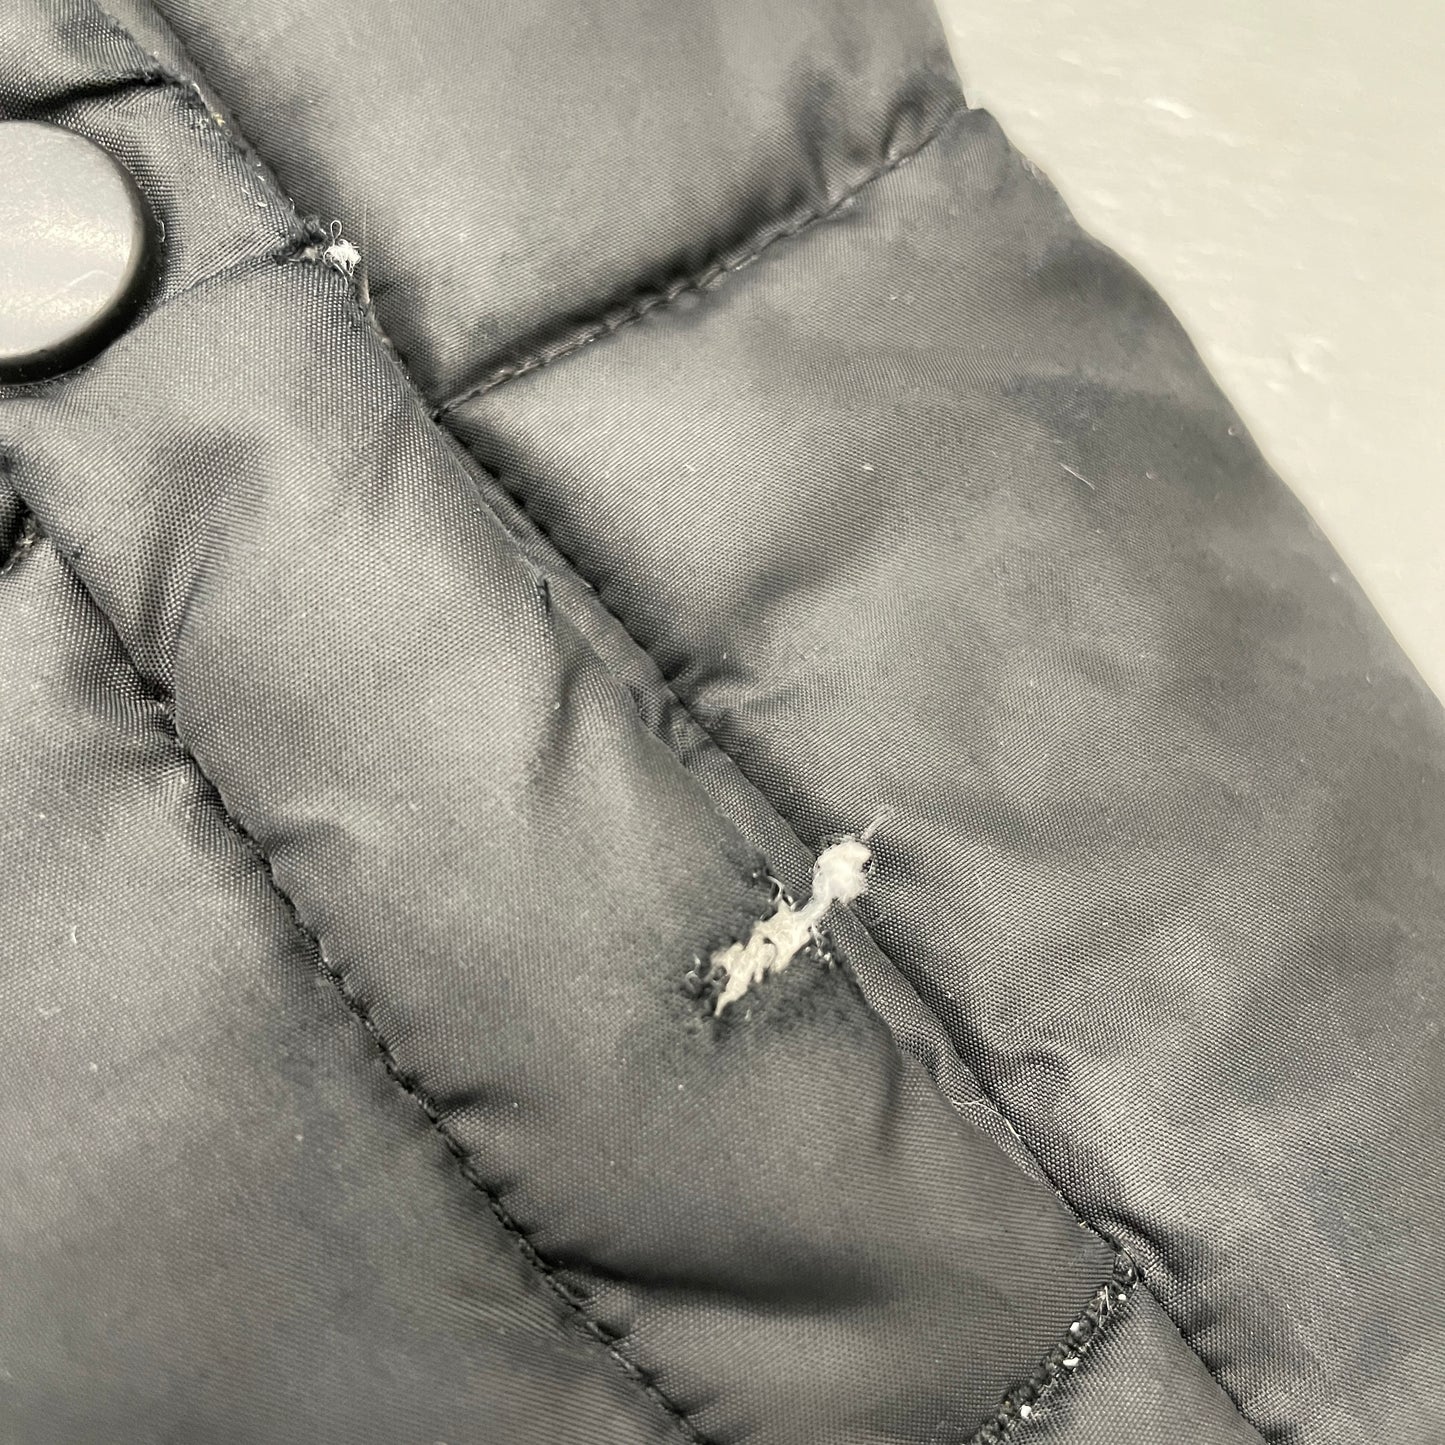 POLO JEANS CO. Ralph Lauren Vintage Puffer Jacket